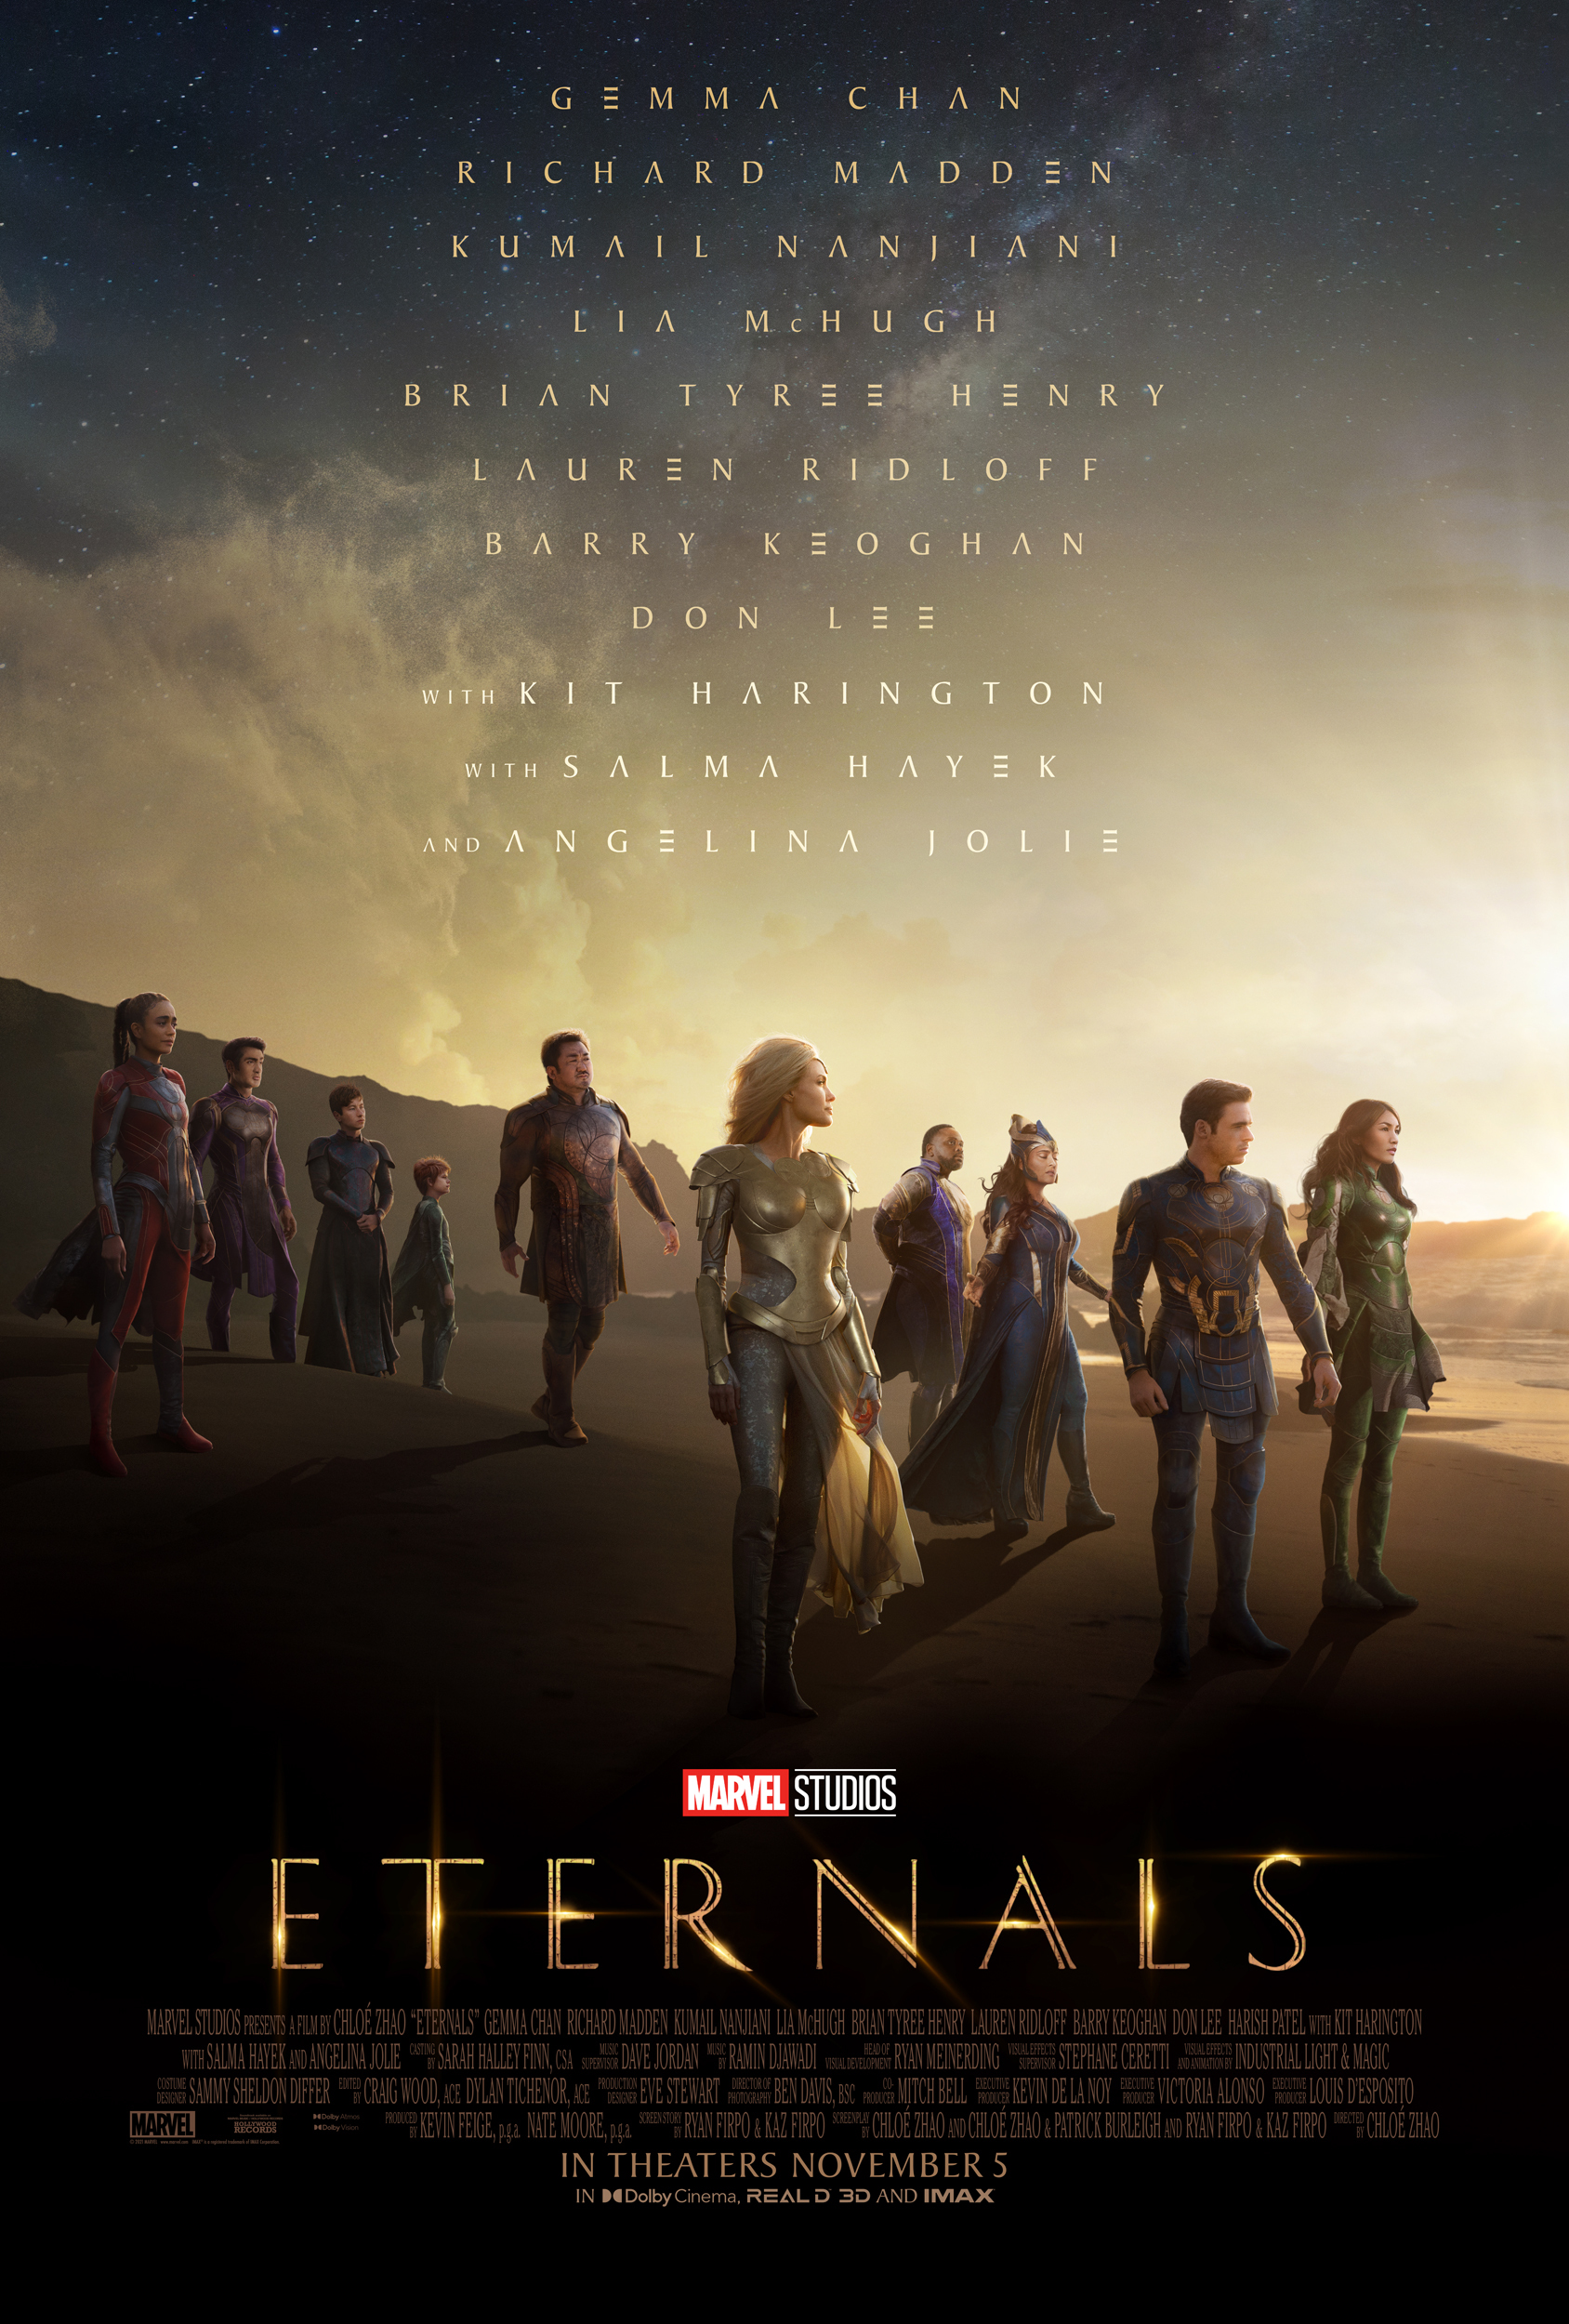 Poster for Marvel Studios' "Eternals"